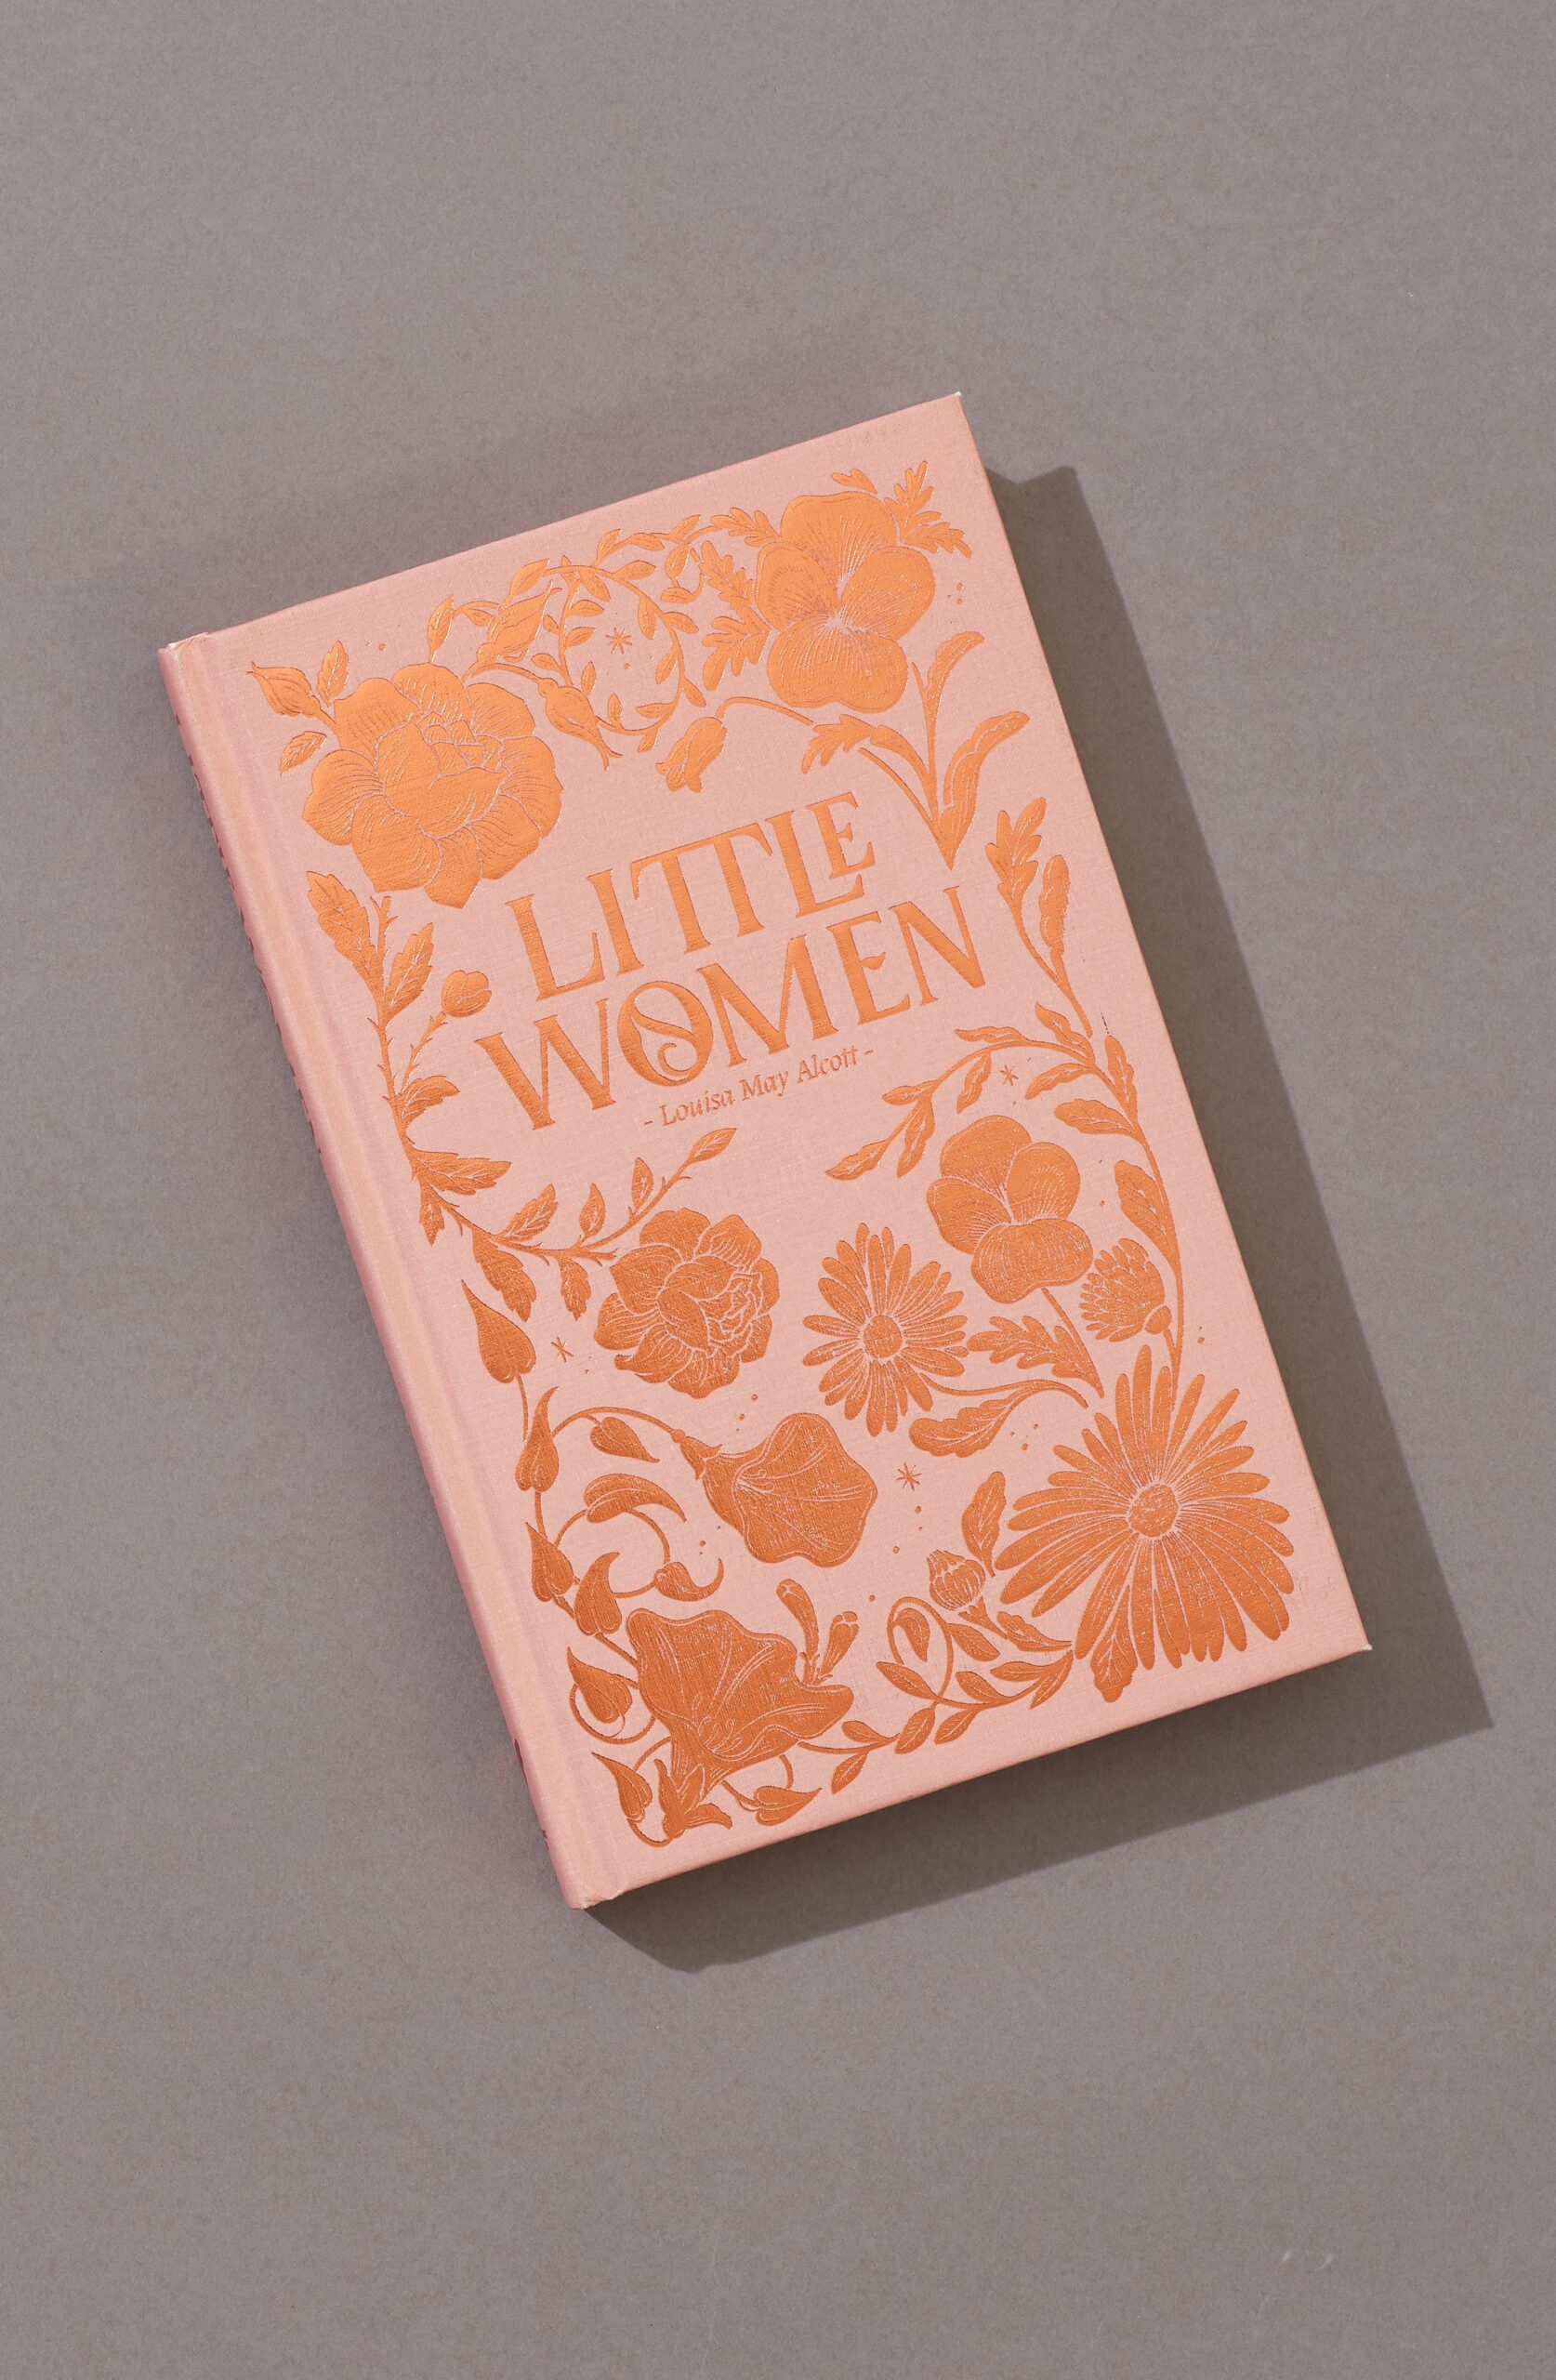 Little Women Luxe cover